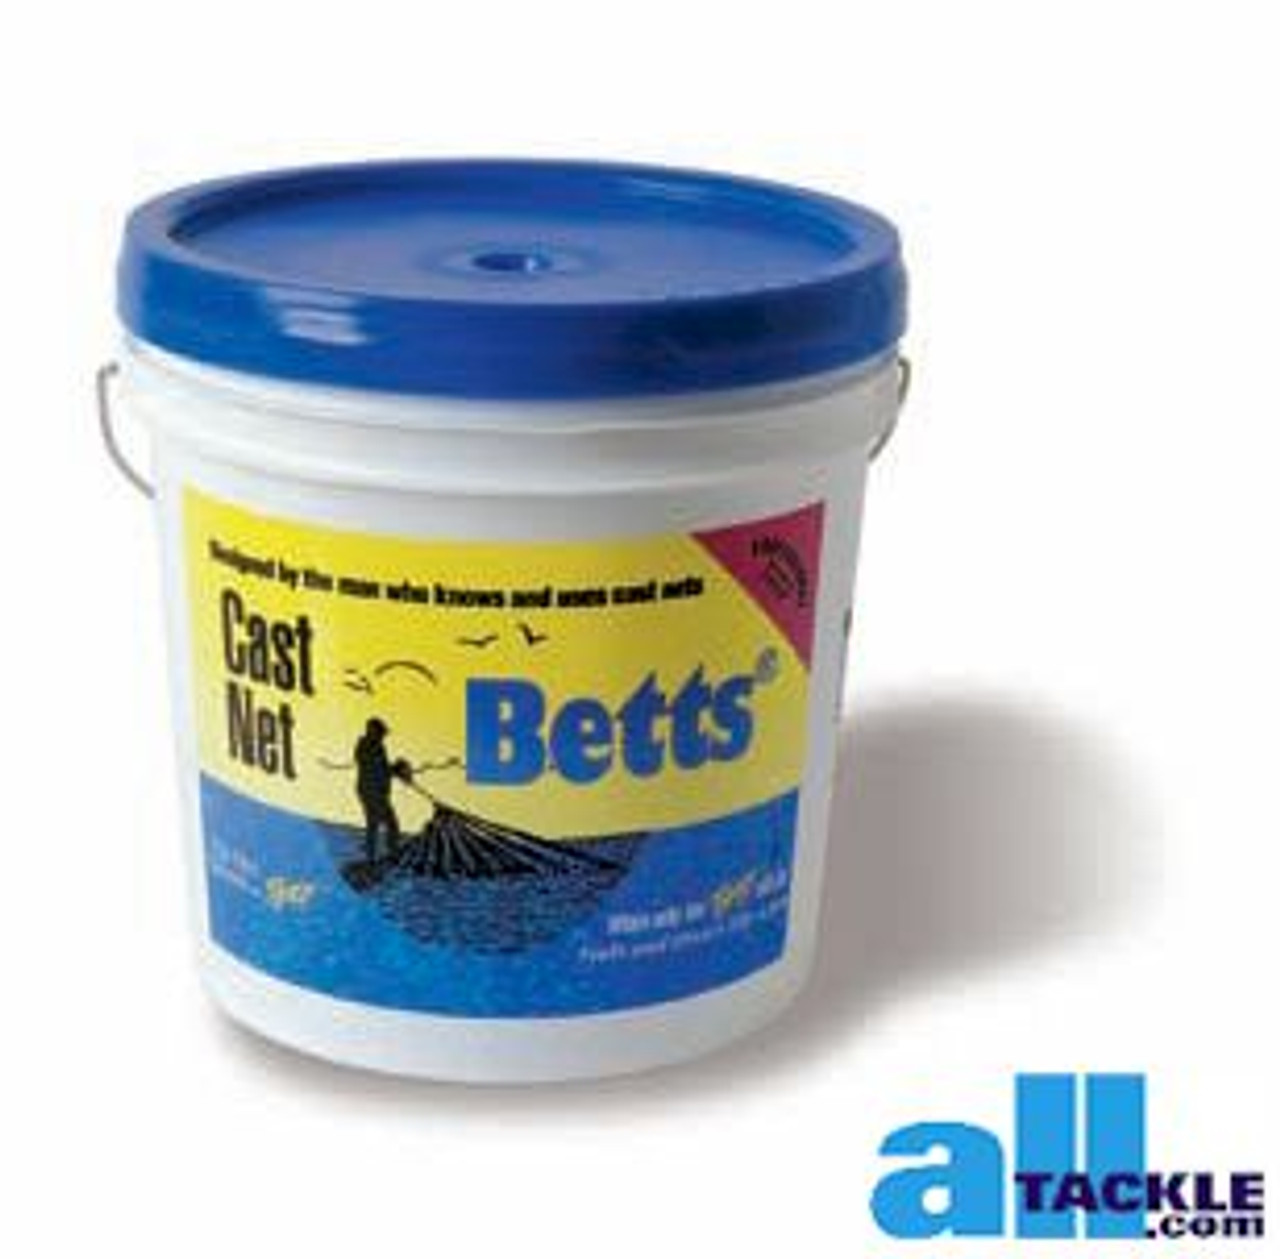 Betts Mullet Cast Net 1 inch 6ft